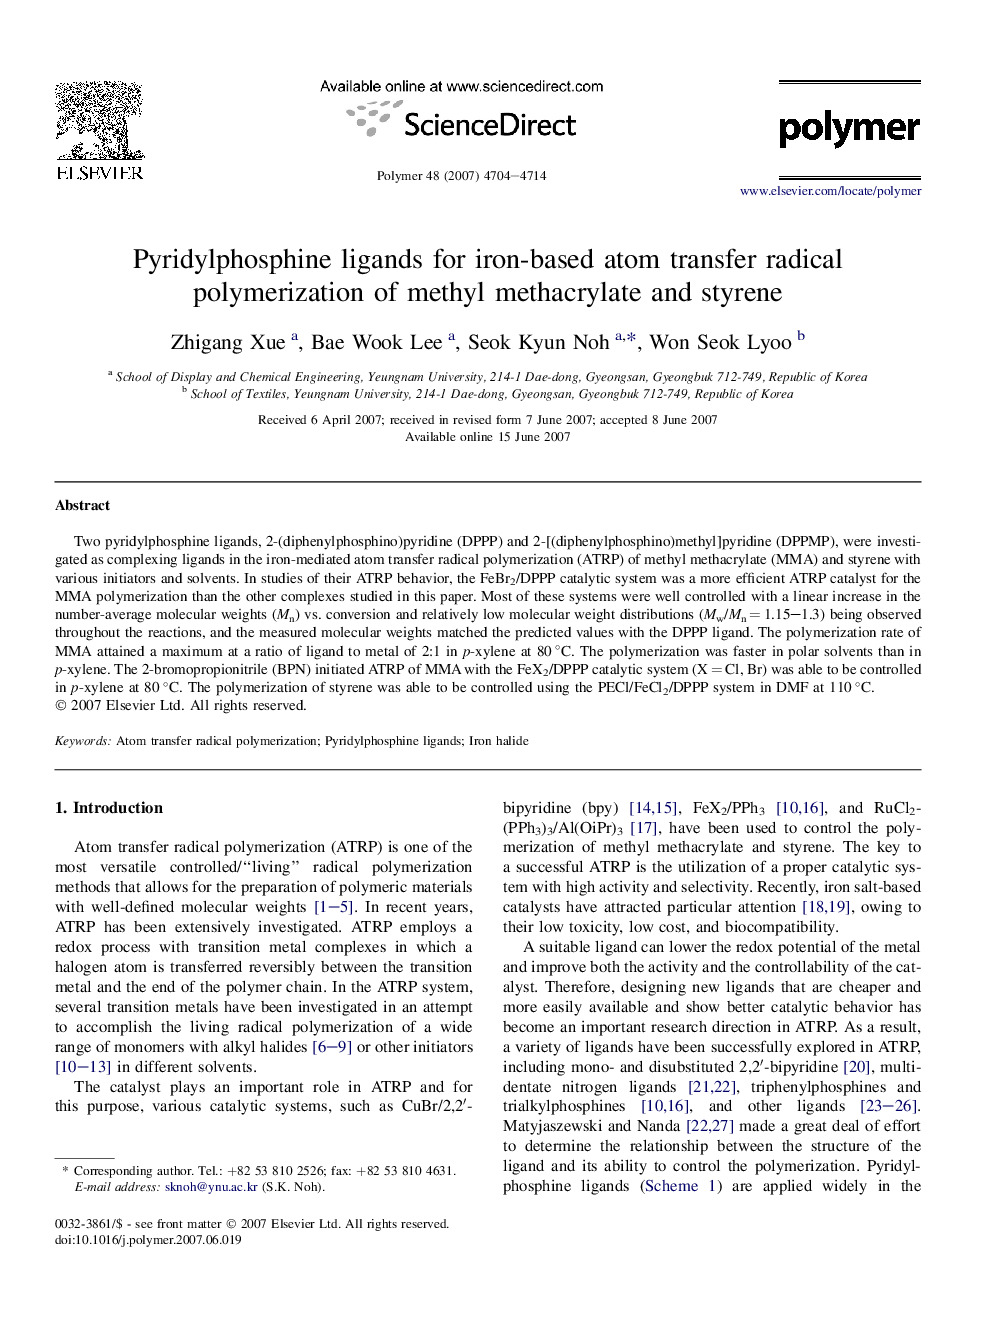 Pyridylphosphine ligands for iron-based atom transfer radical polymerization of methyl methacrylate and styrene